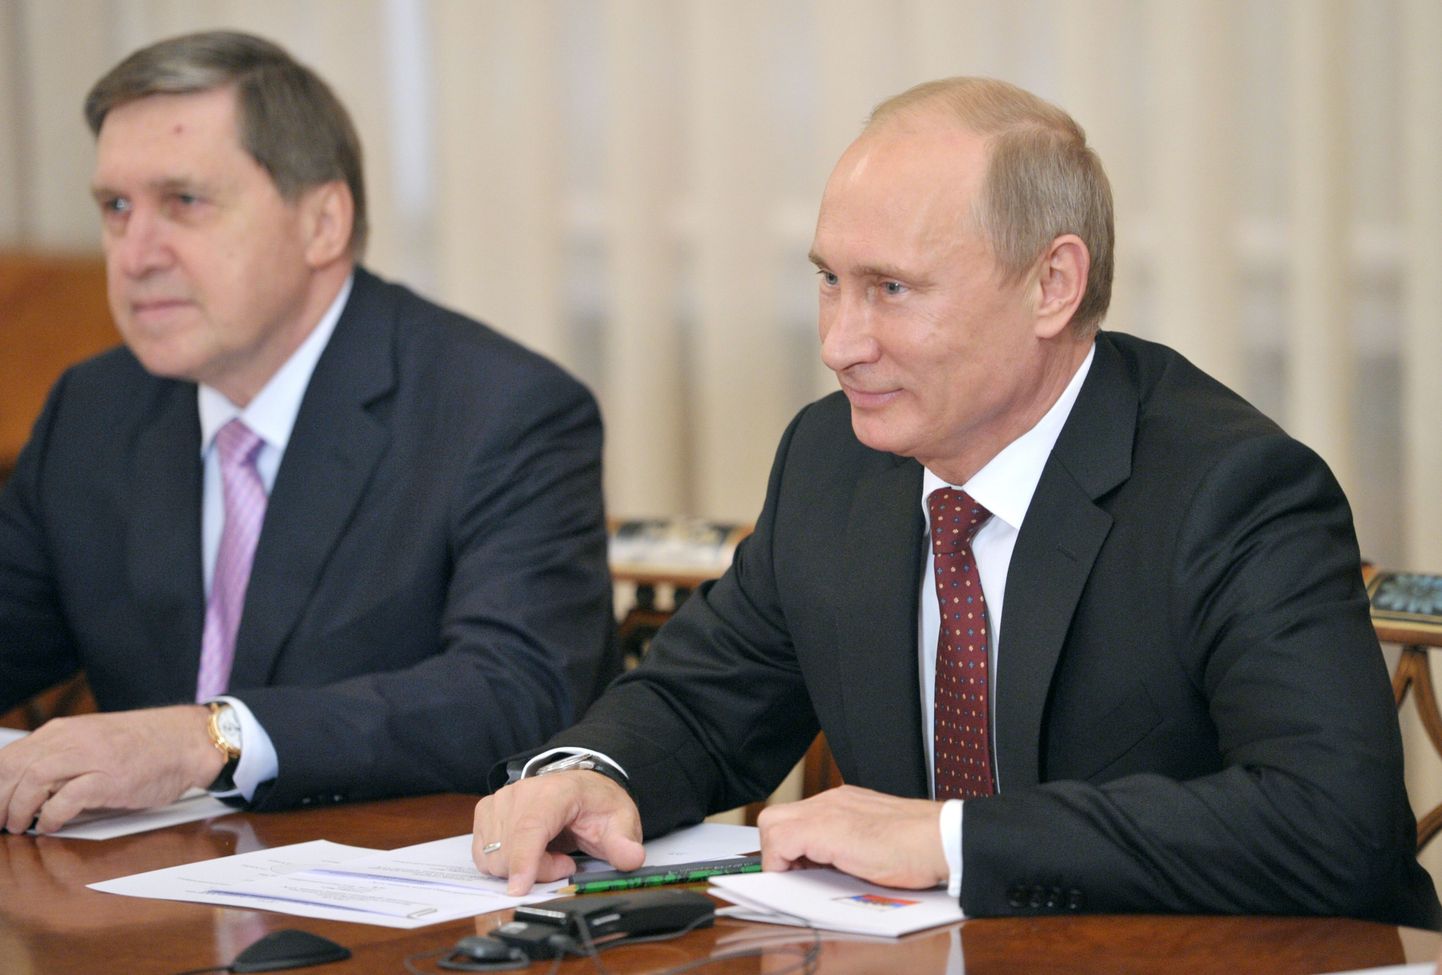 Vene president Vladimir Putin (paremal) koos oma abi Juri Ušakoviga.